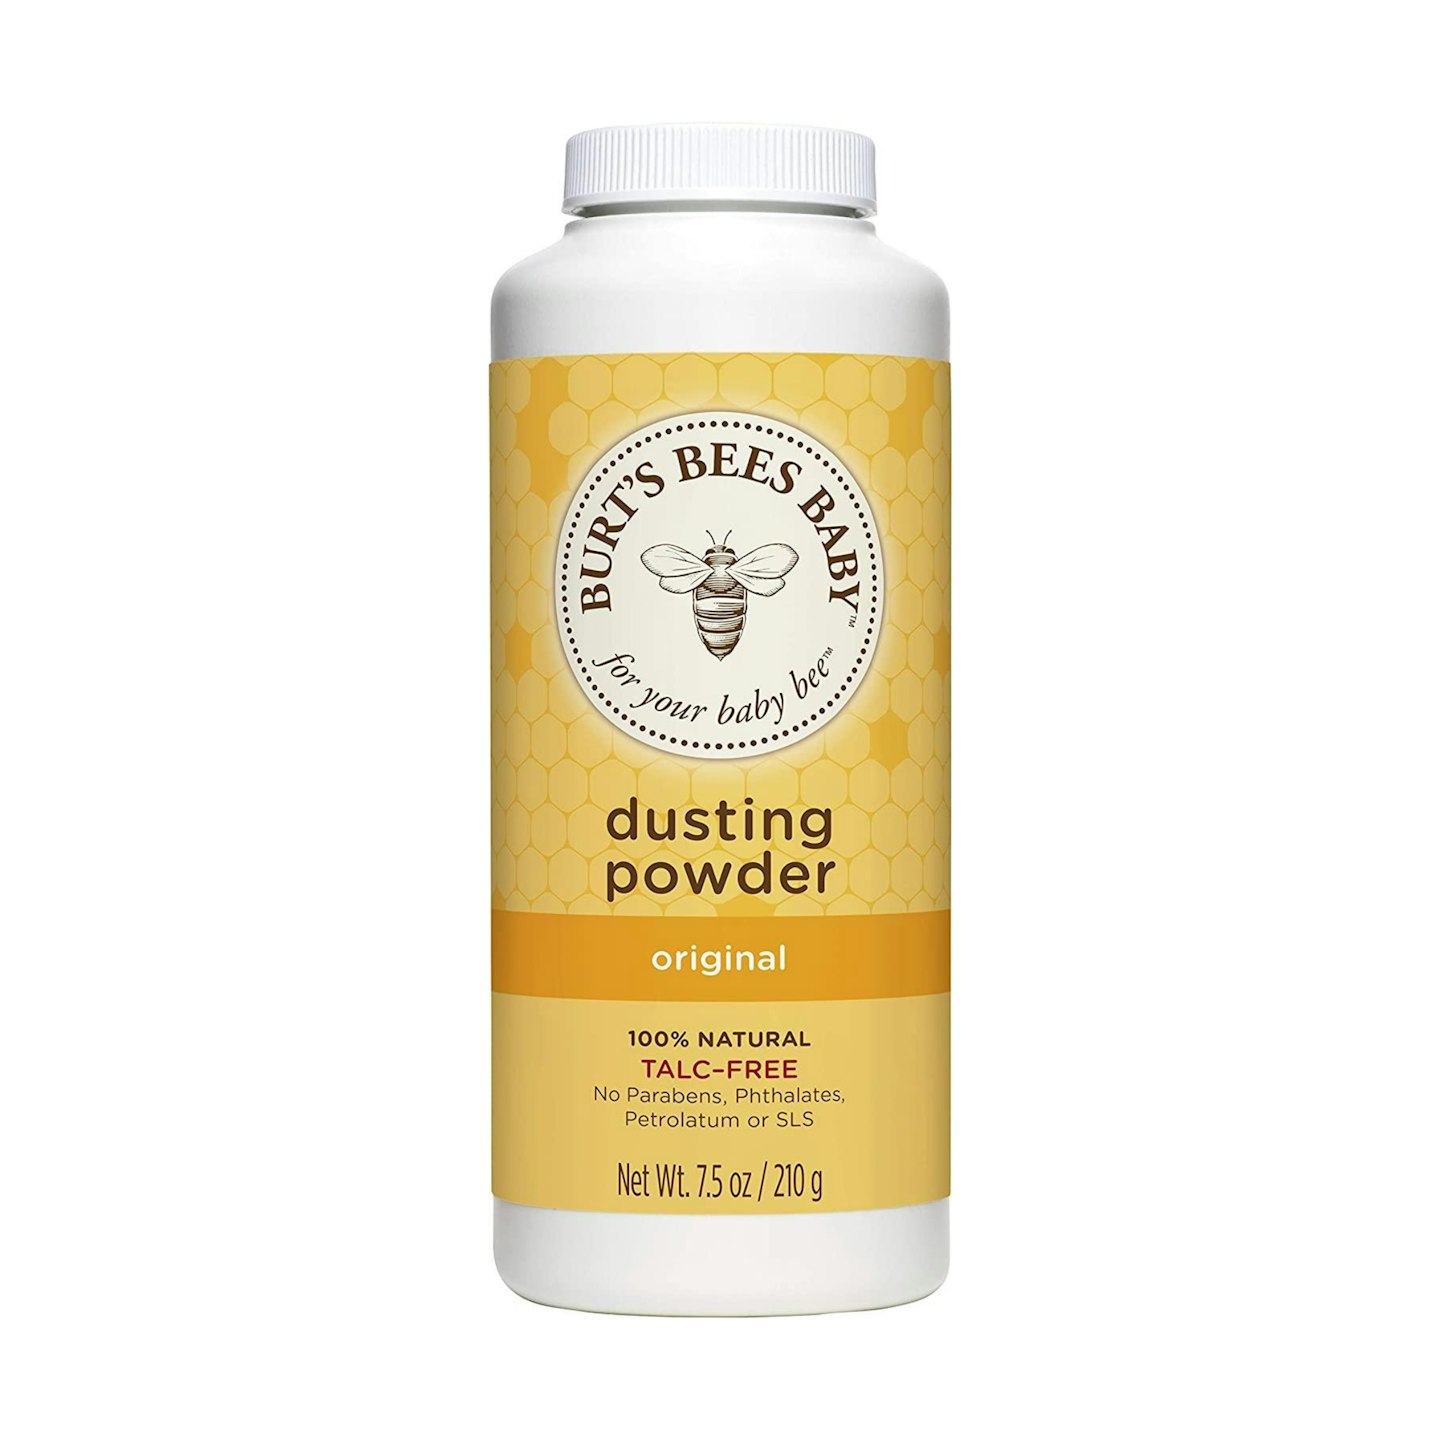 Burt's Bees Baby 100% Natural Dusting Powder, Talc-Free